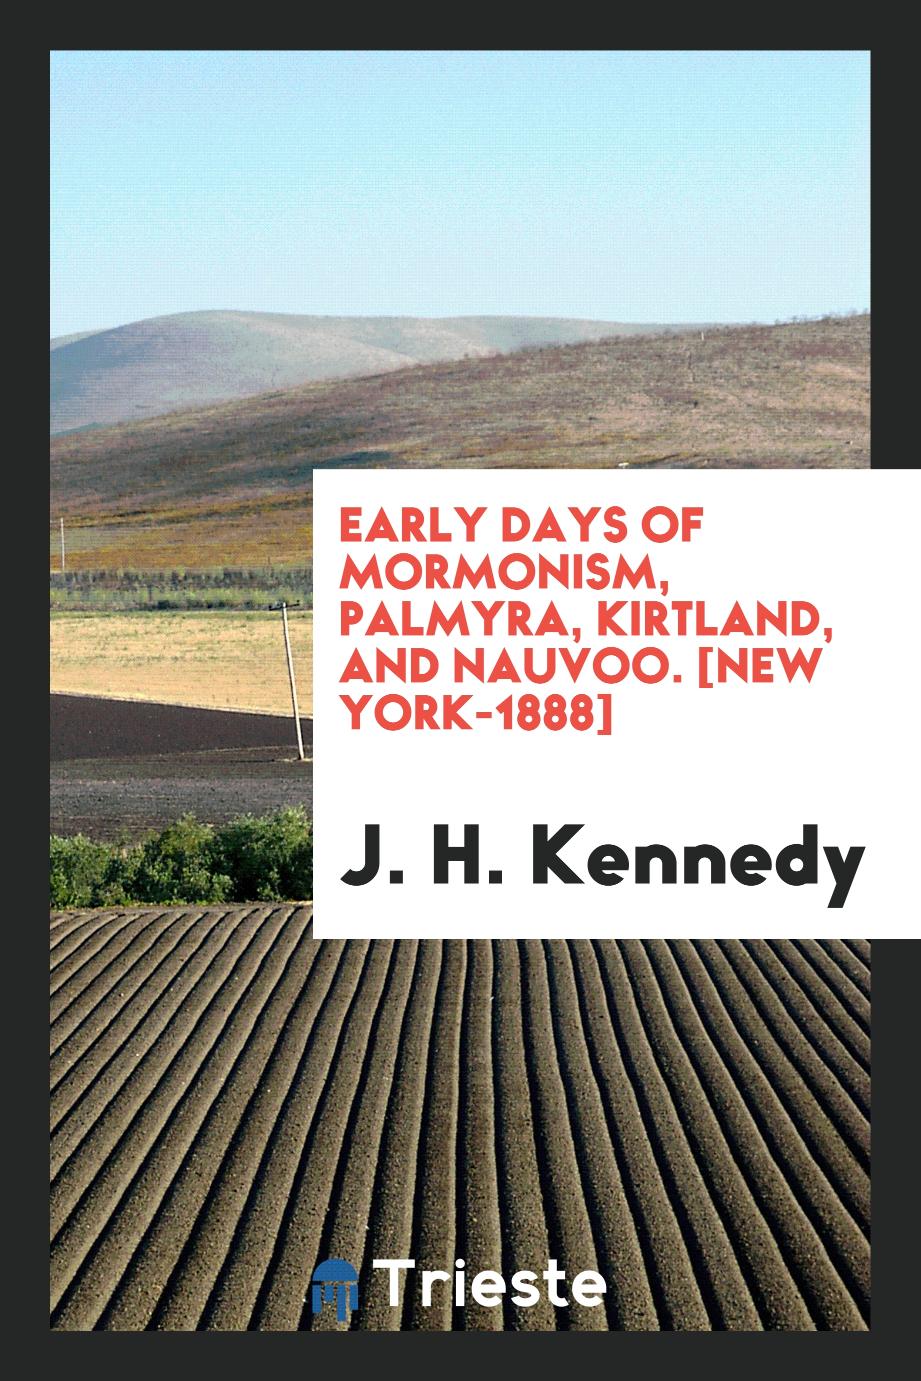 J. H. Kennedy - Early Days of Mormonism, Palmyra, Kirtland, and Nauvoo. [New York-1888]